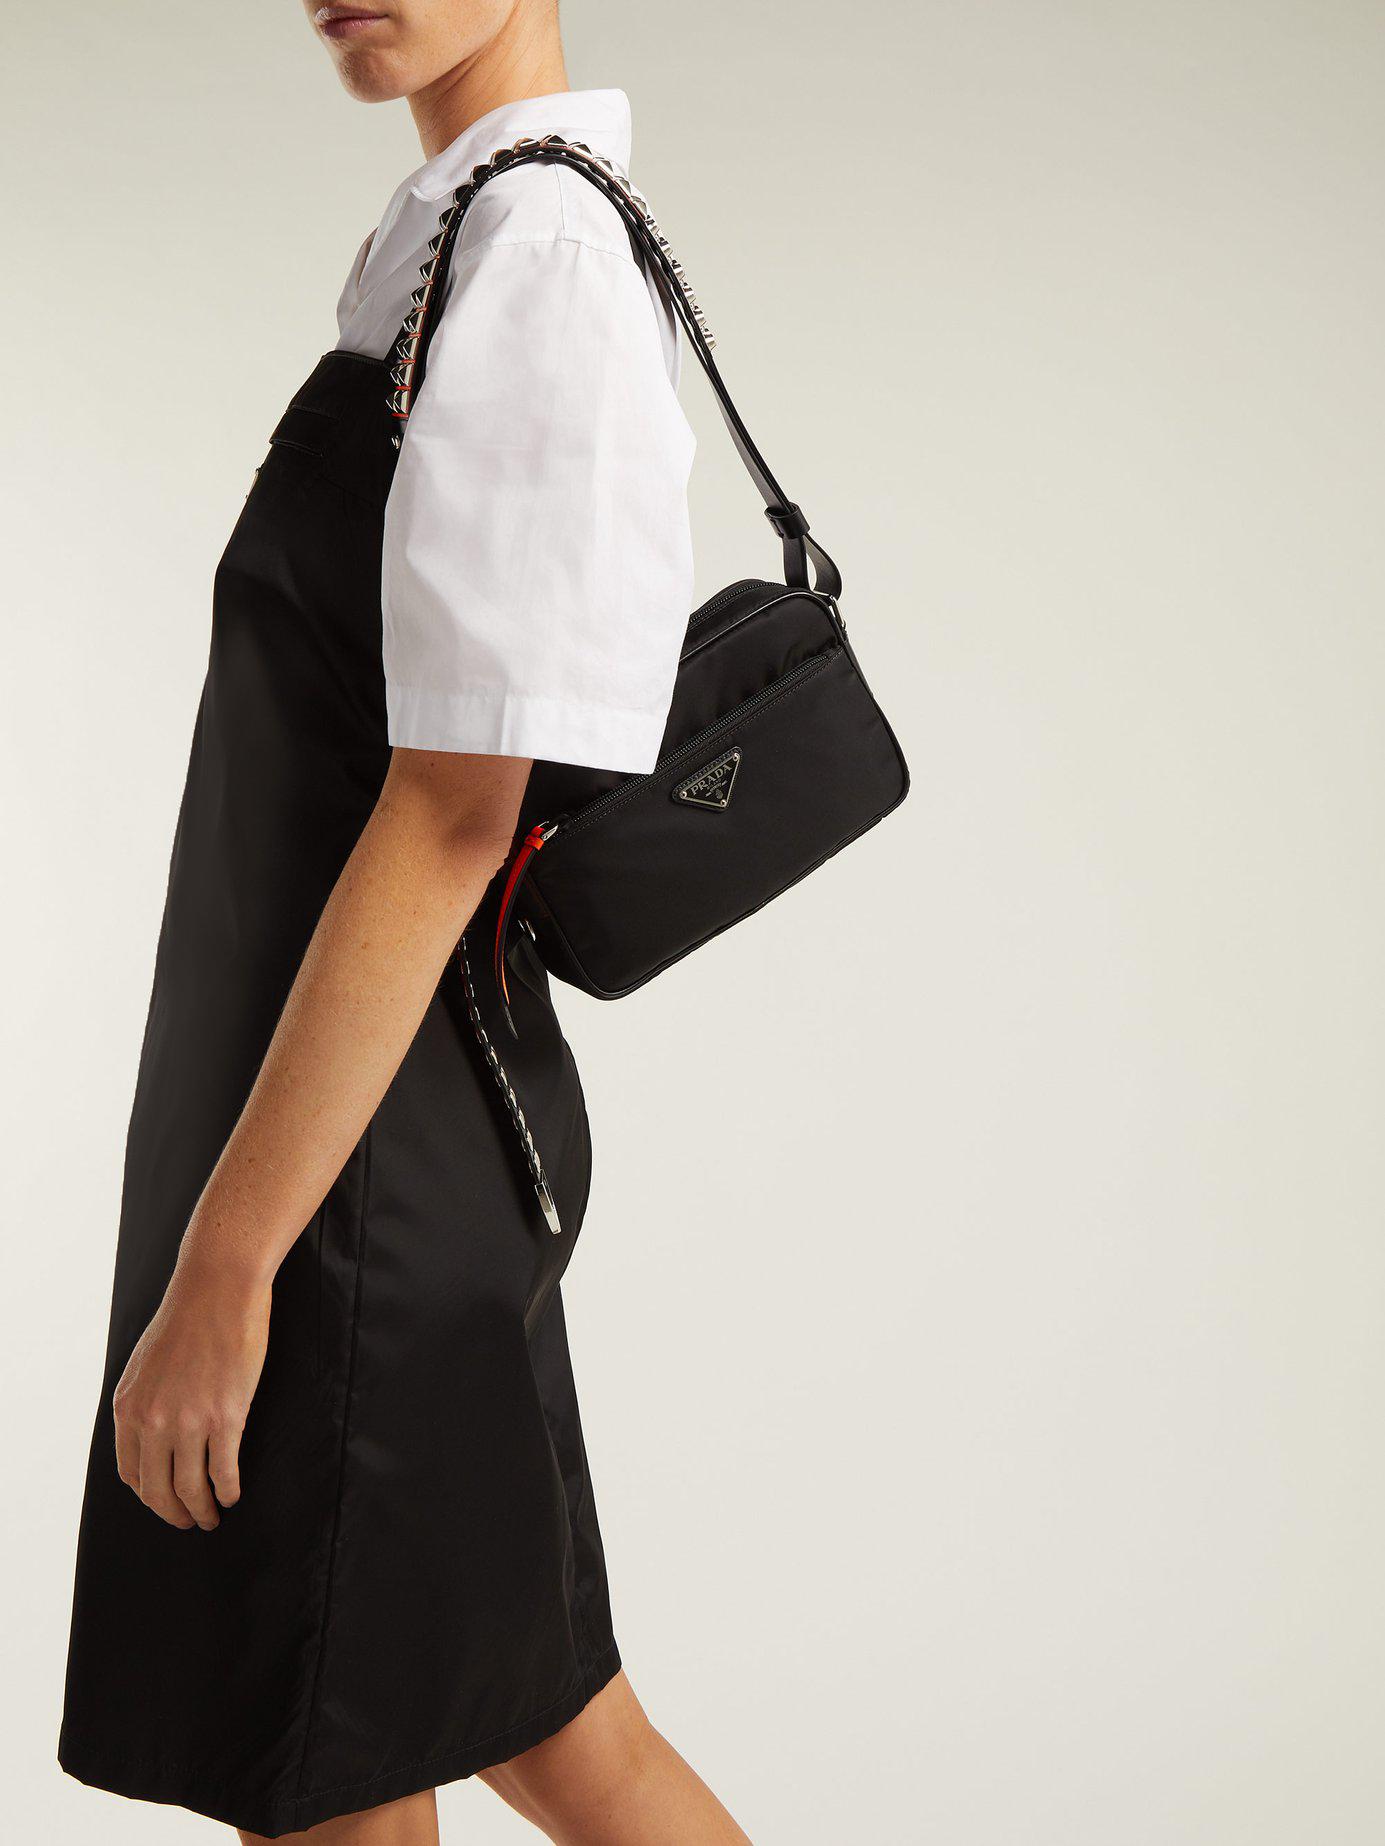 Prada Stud-embellished Nylon Cross-body Bag in Black